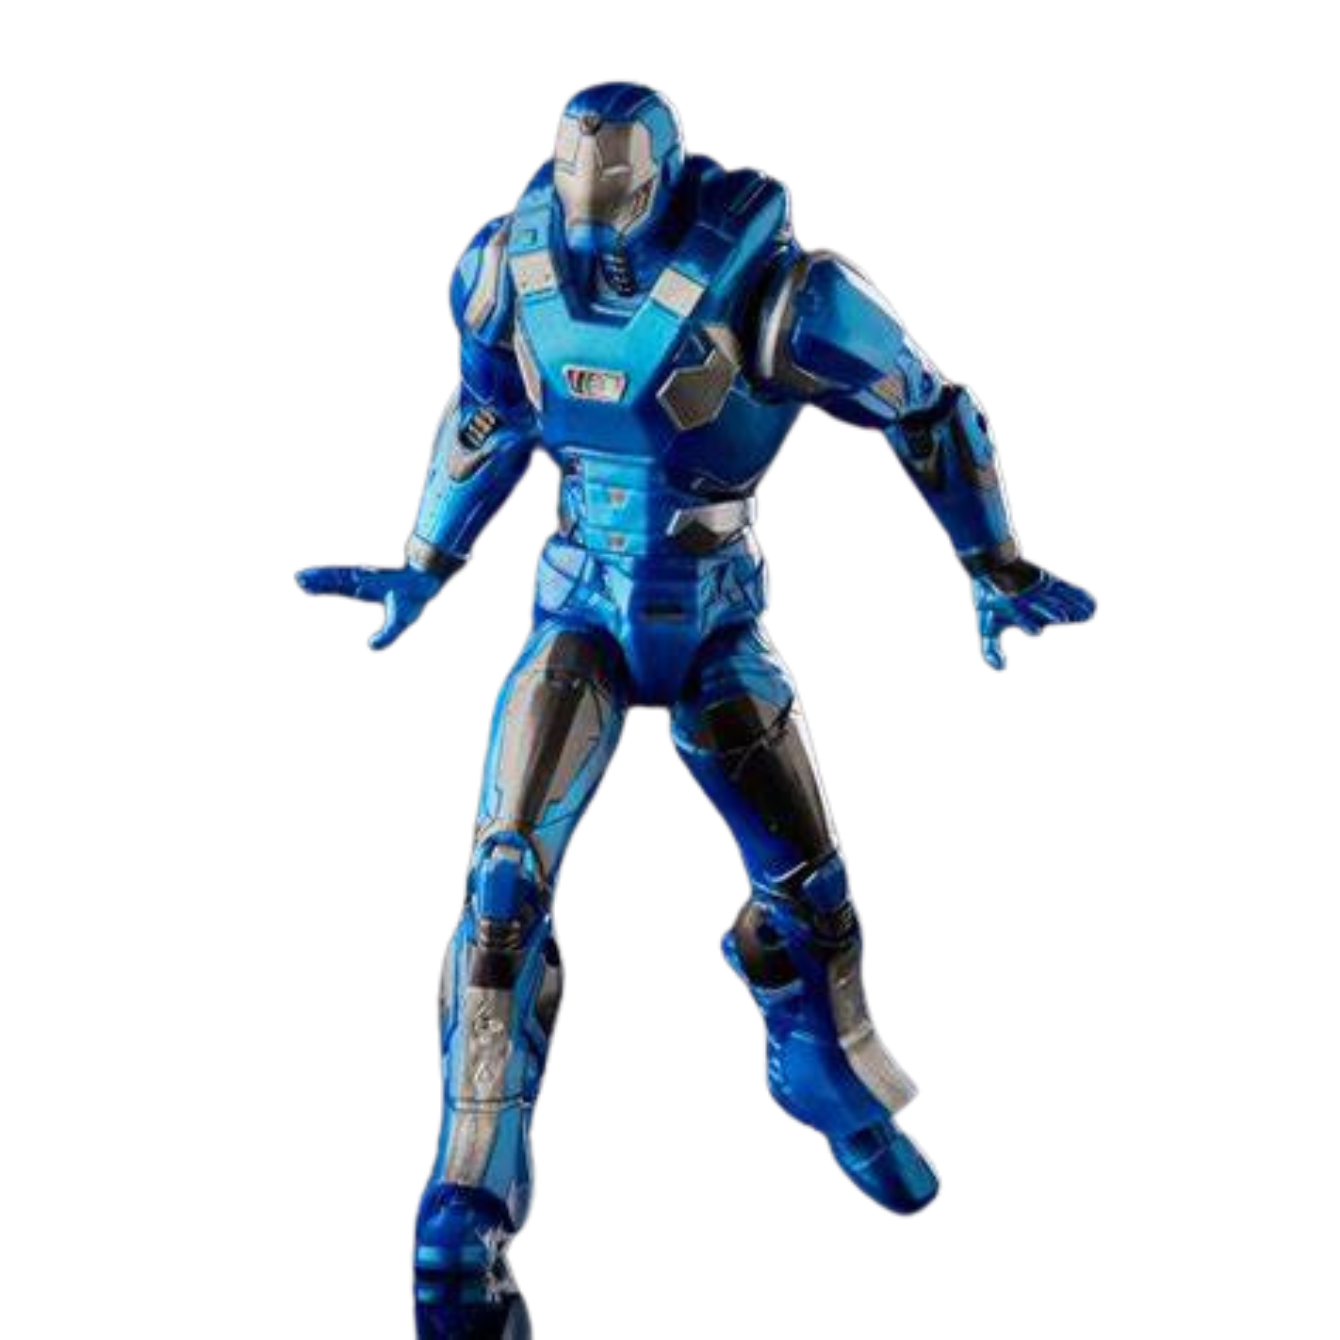 Marvel Legends Avengers Joe Fixit Wave Iron Man 6 Inch Action Figure